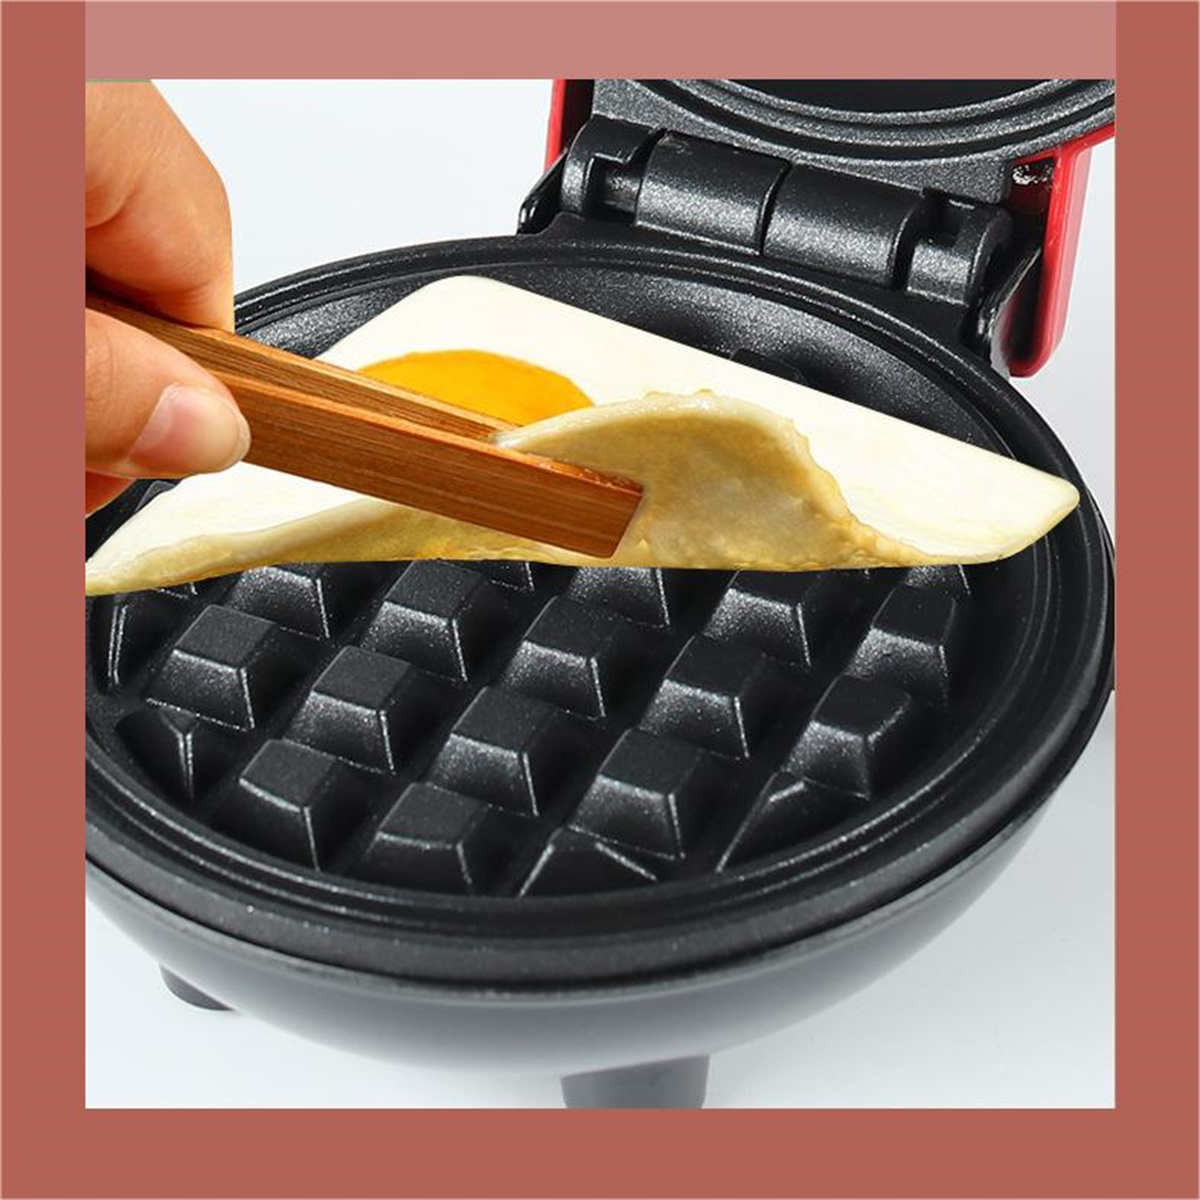 Rosa Frühstücksmaschine Pfannkuchen Rosa Sandwich Backen Waffelmaschine Maschine Kuchen SYNTEK Waffeln